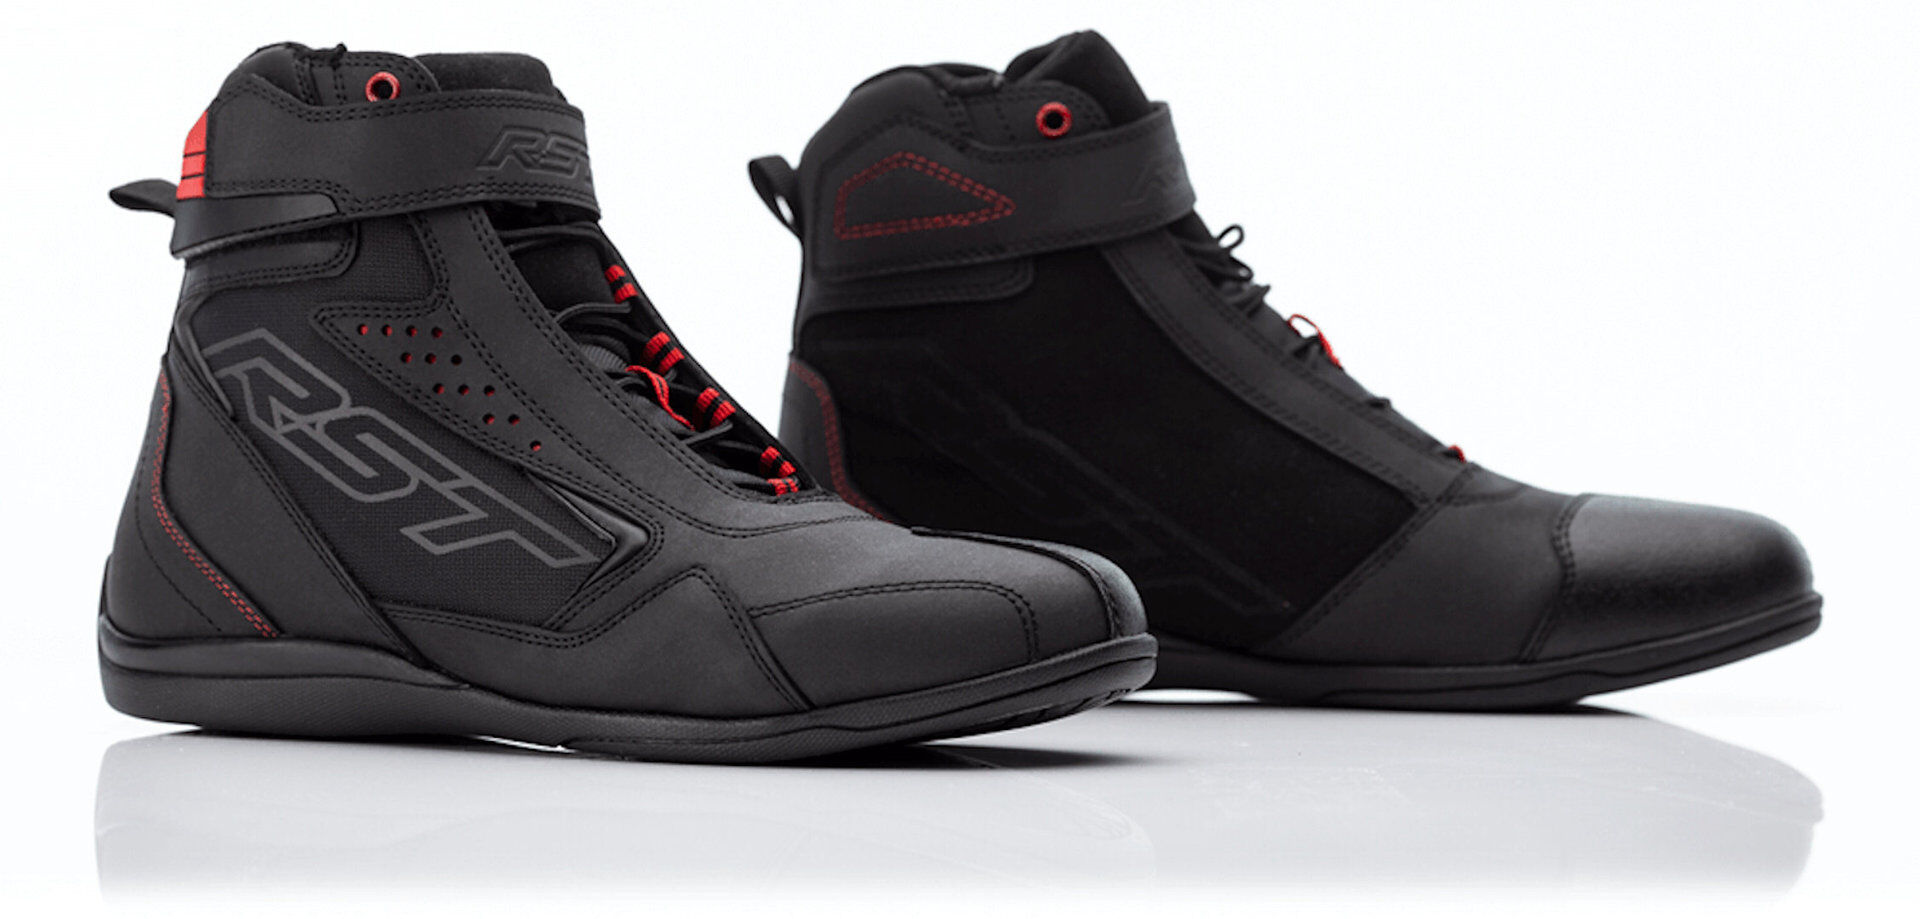 RST Frontier Zapatos de motocicleta para mujer - Negro Rojo (39)